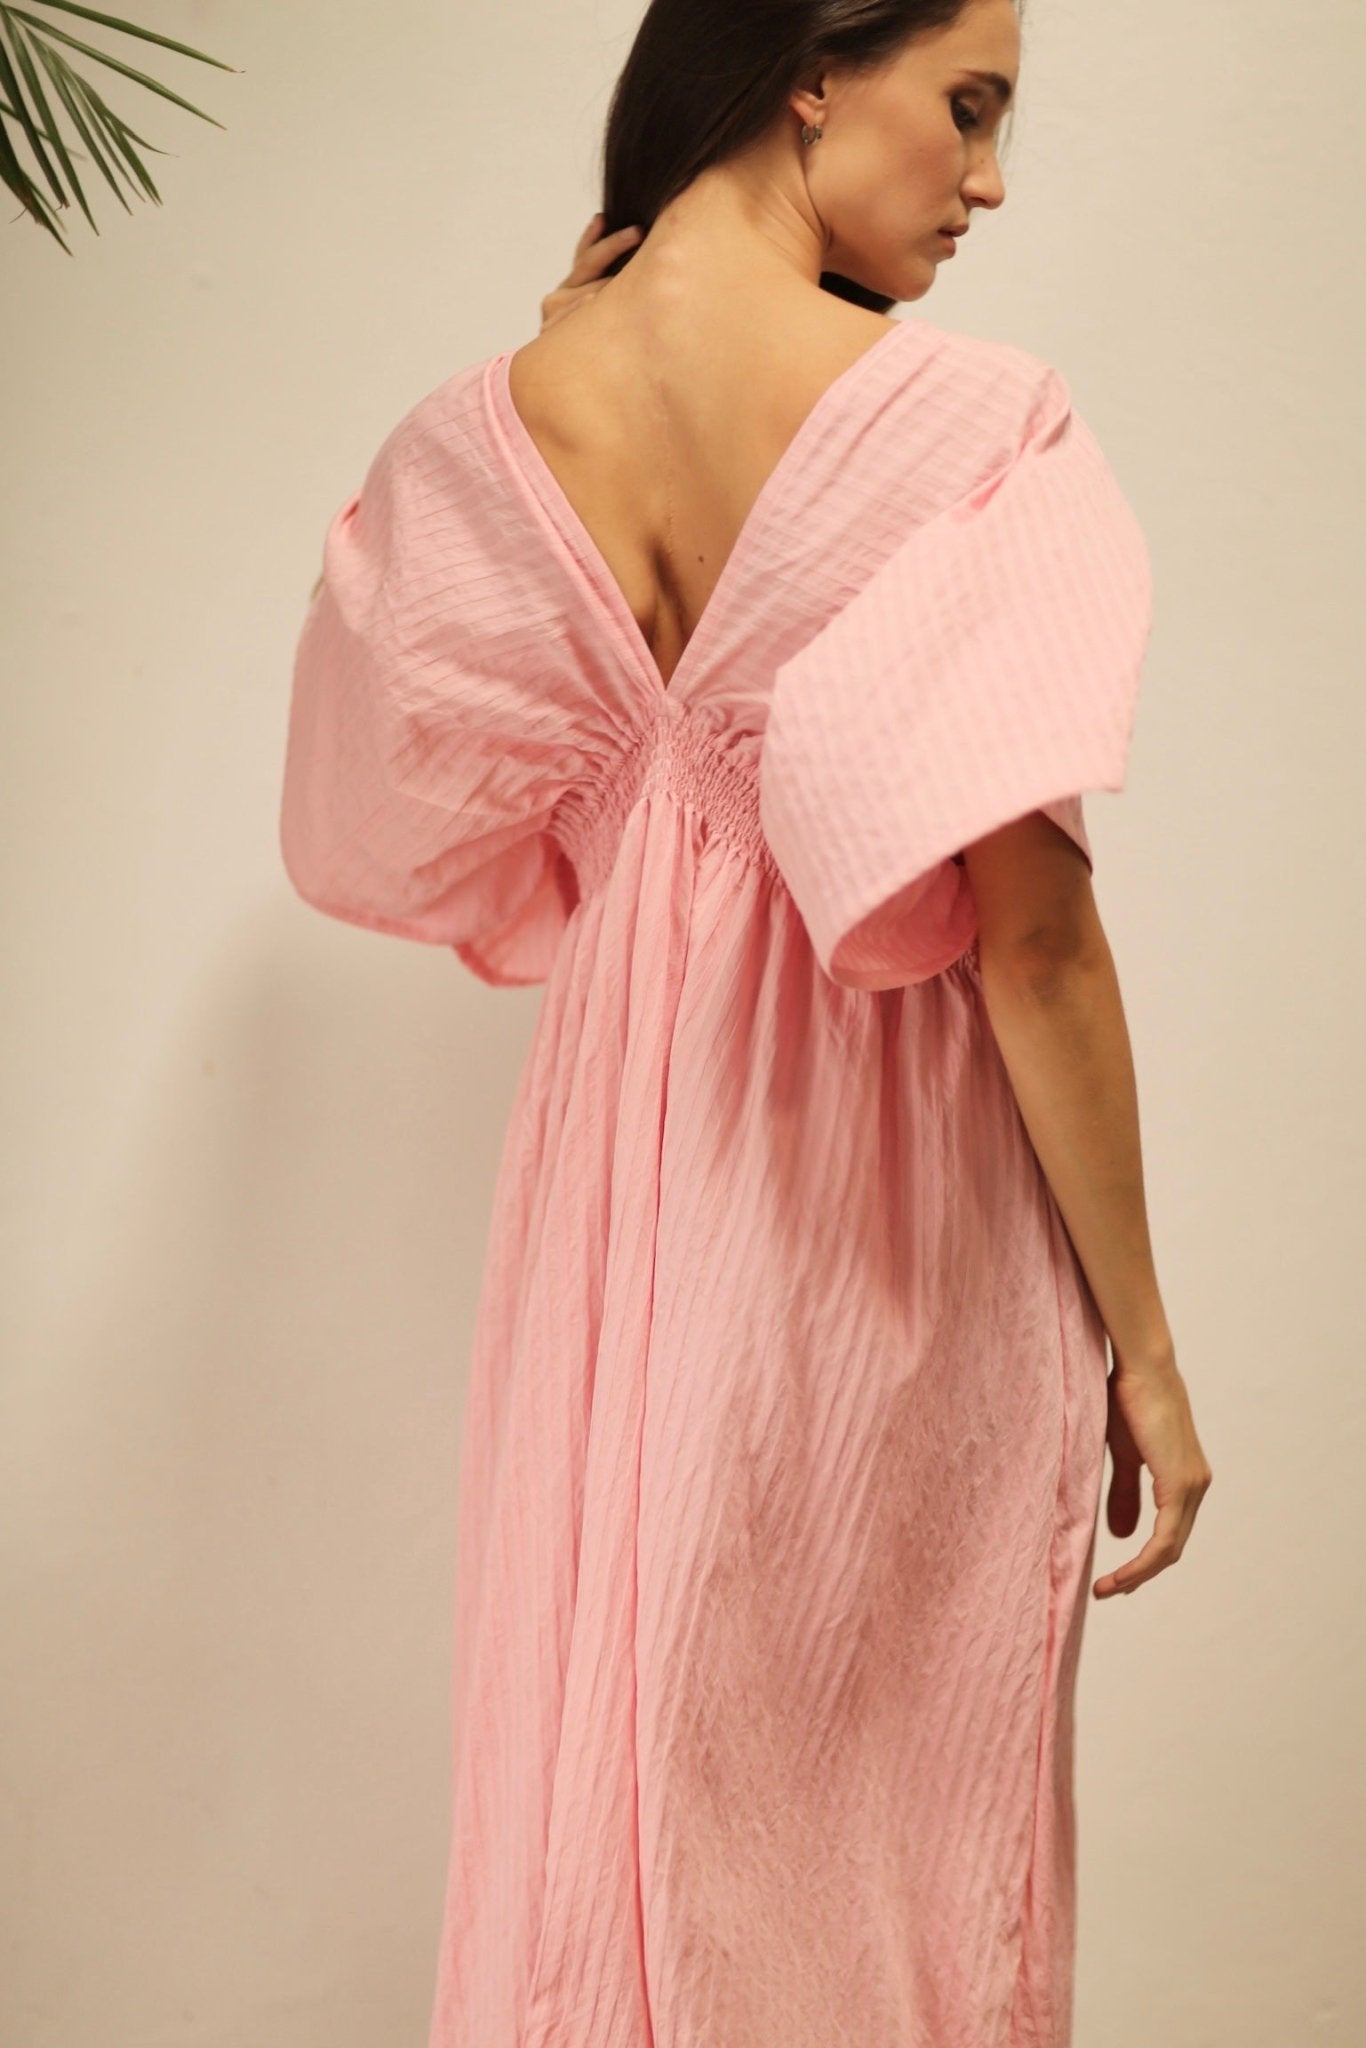 MELANTHIOS PINK COTTON V-NECK DRESS - BANGKOK TAILOR CLOTHING STORE - HANDMADE CLOTHING